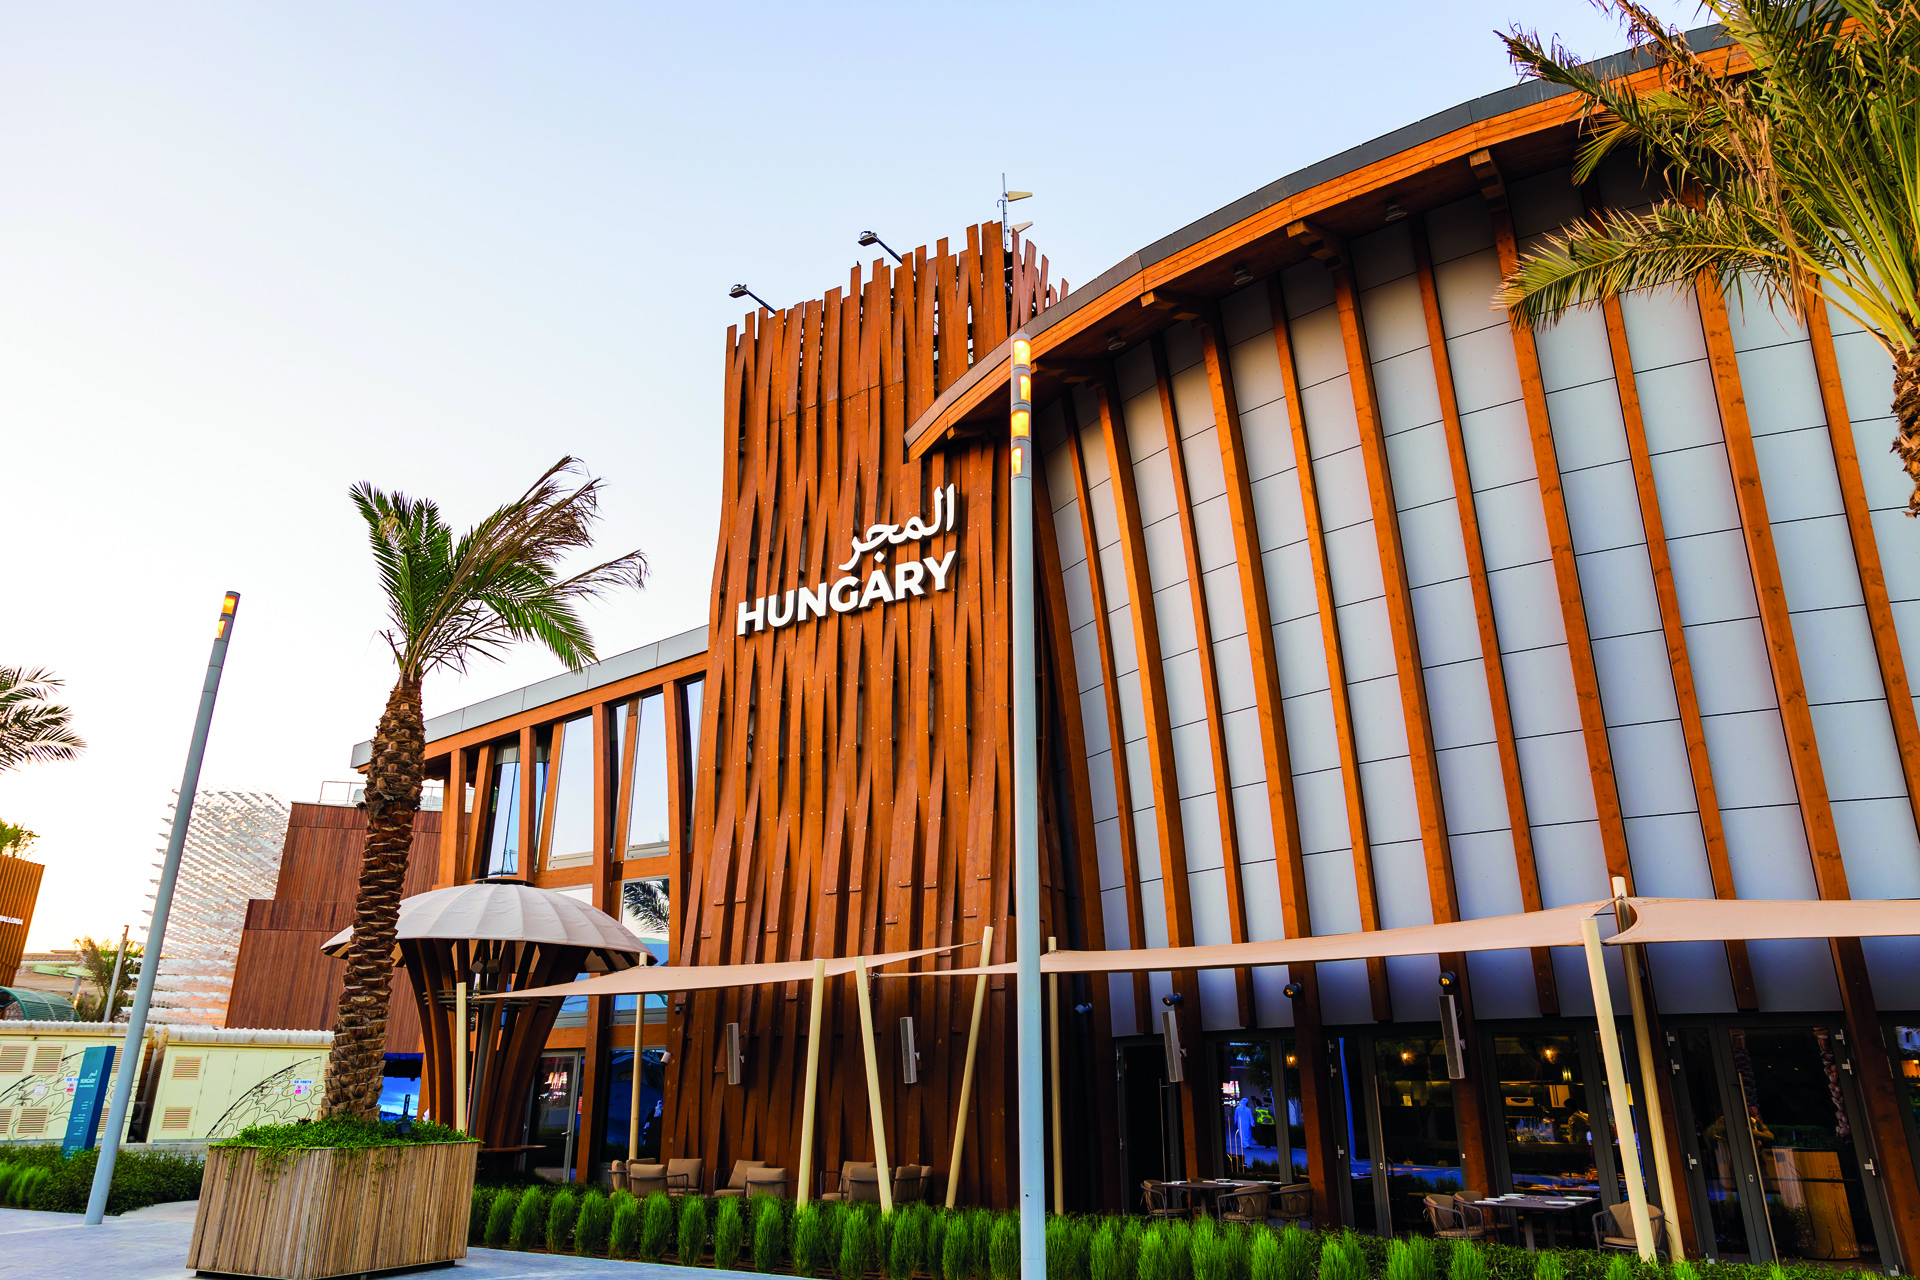 Dubai, United Arab Emirates - October 13, 2021: Hungary pavilion at the Expo 2020 Dubai UAE